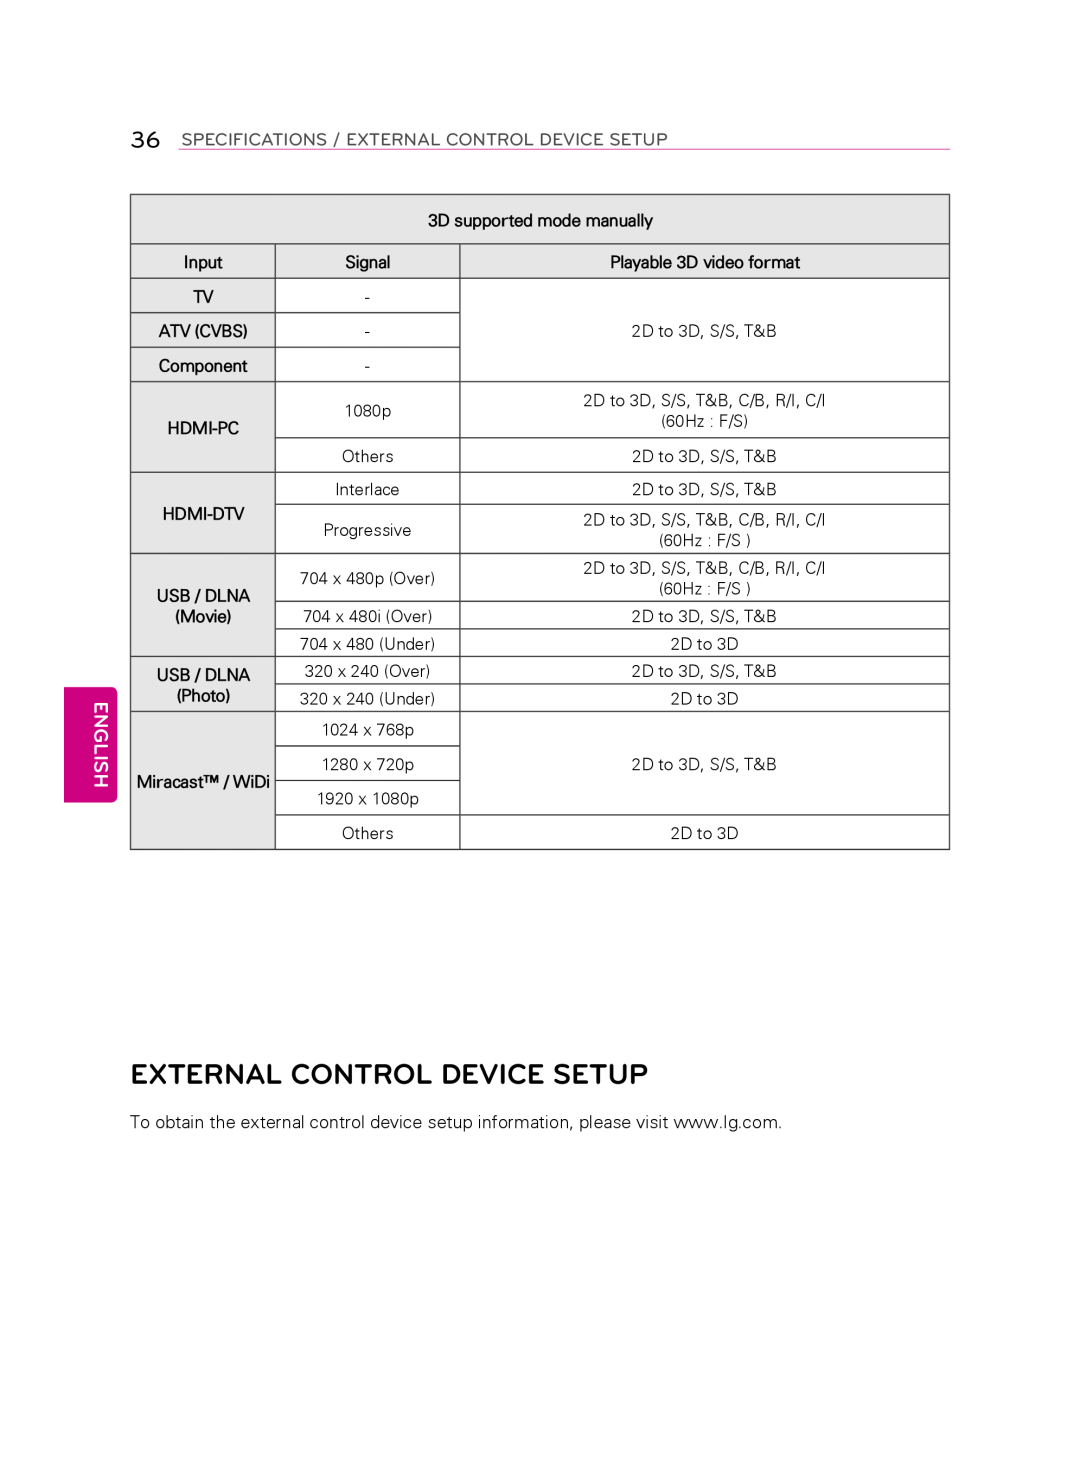 LG Electronics 55LA9650 external control device setup, English, Specifications / External Control Device Setup, Others 